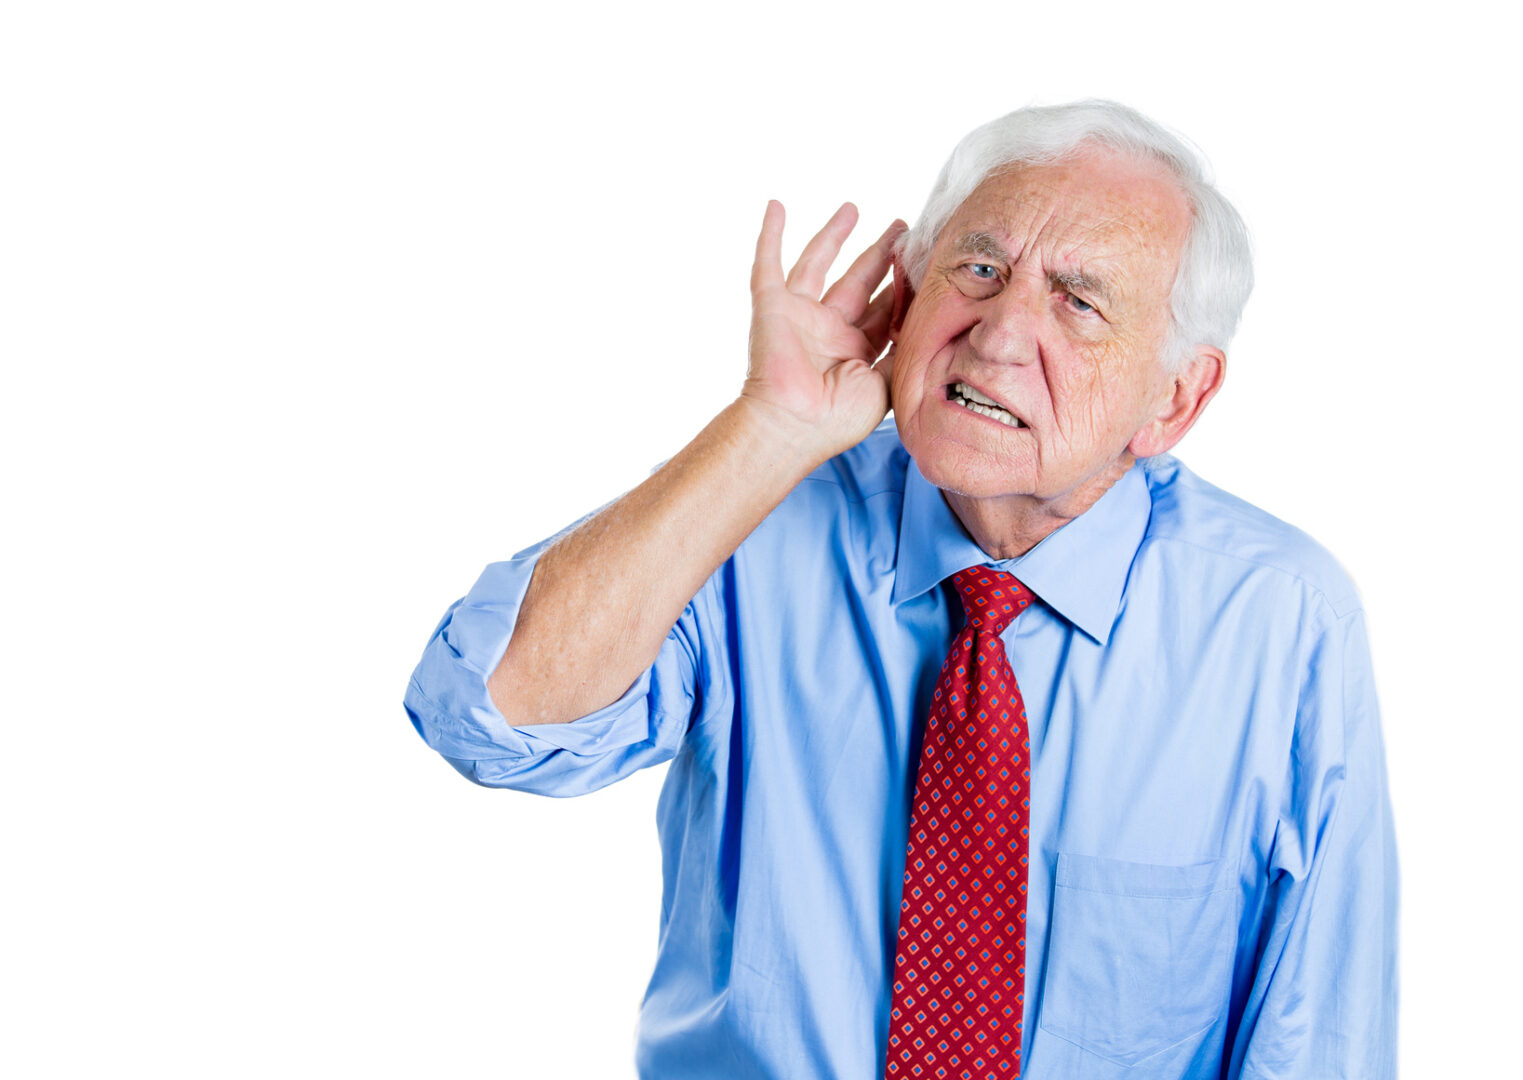 Old man, senior executive having hearing problems